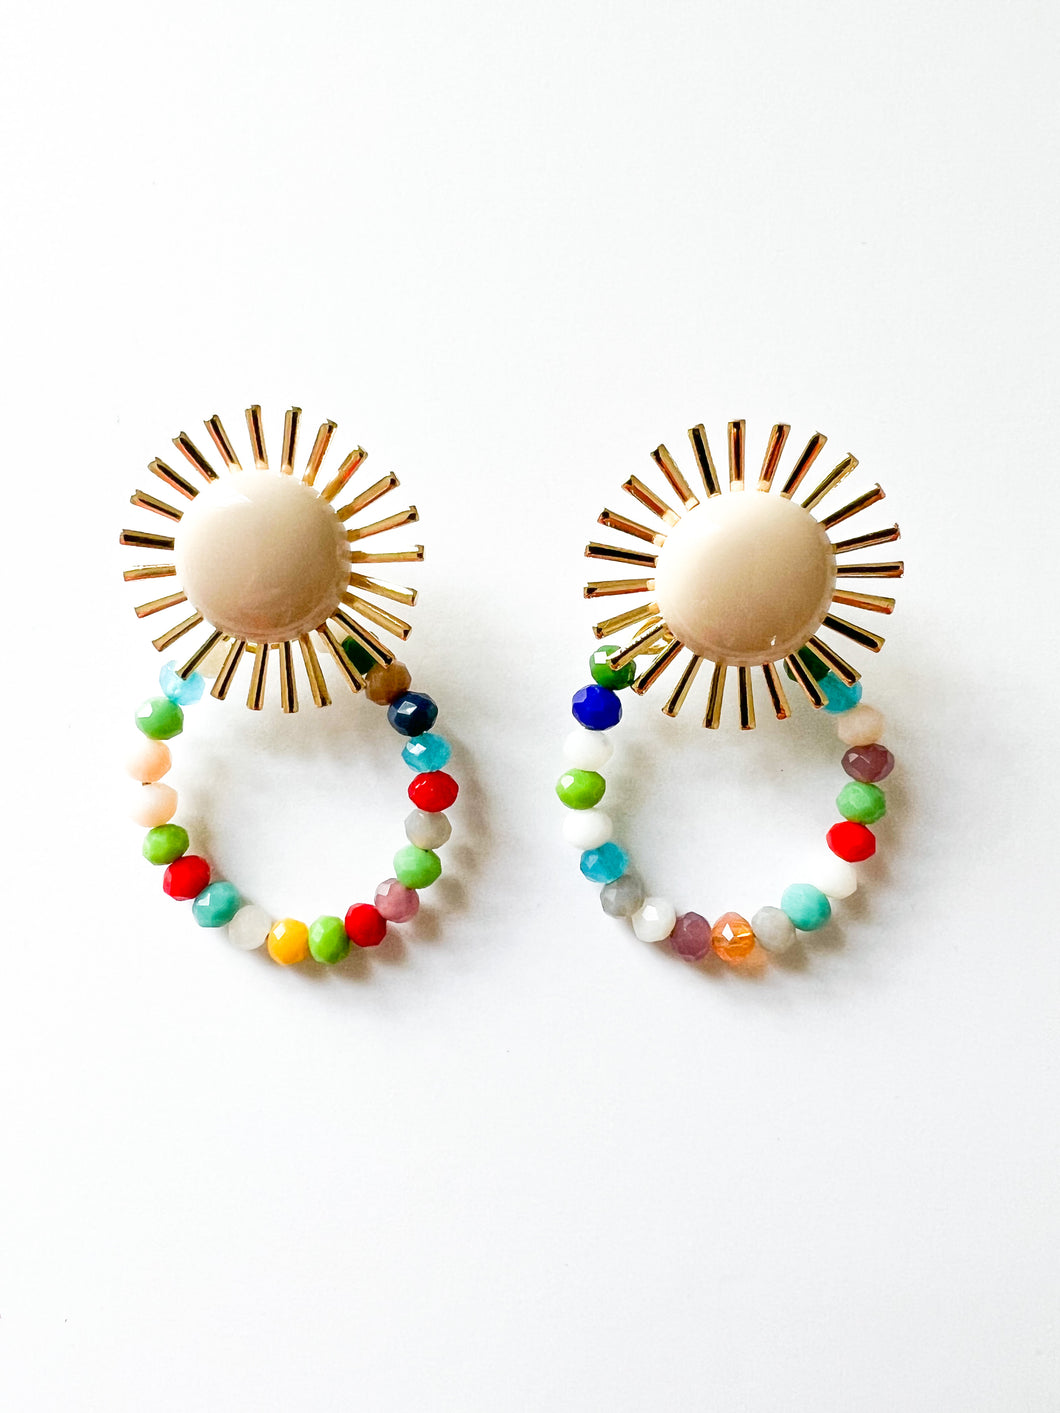 Tan Sunburst with Confetti Gemstones Earrings